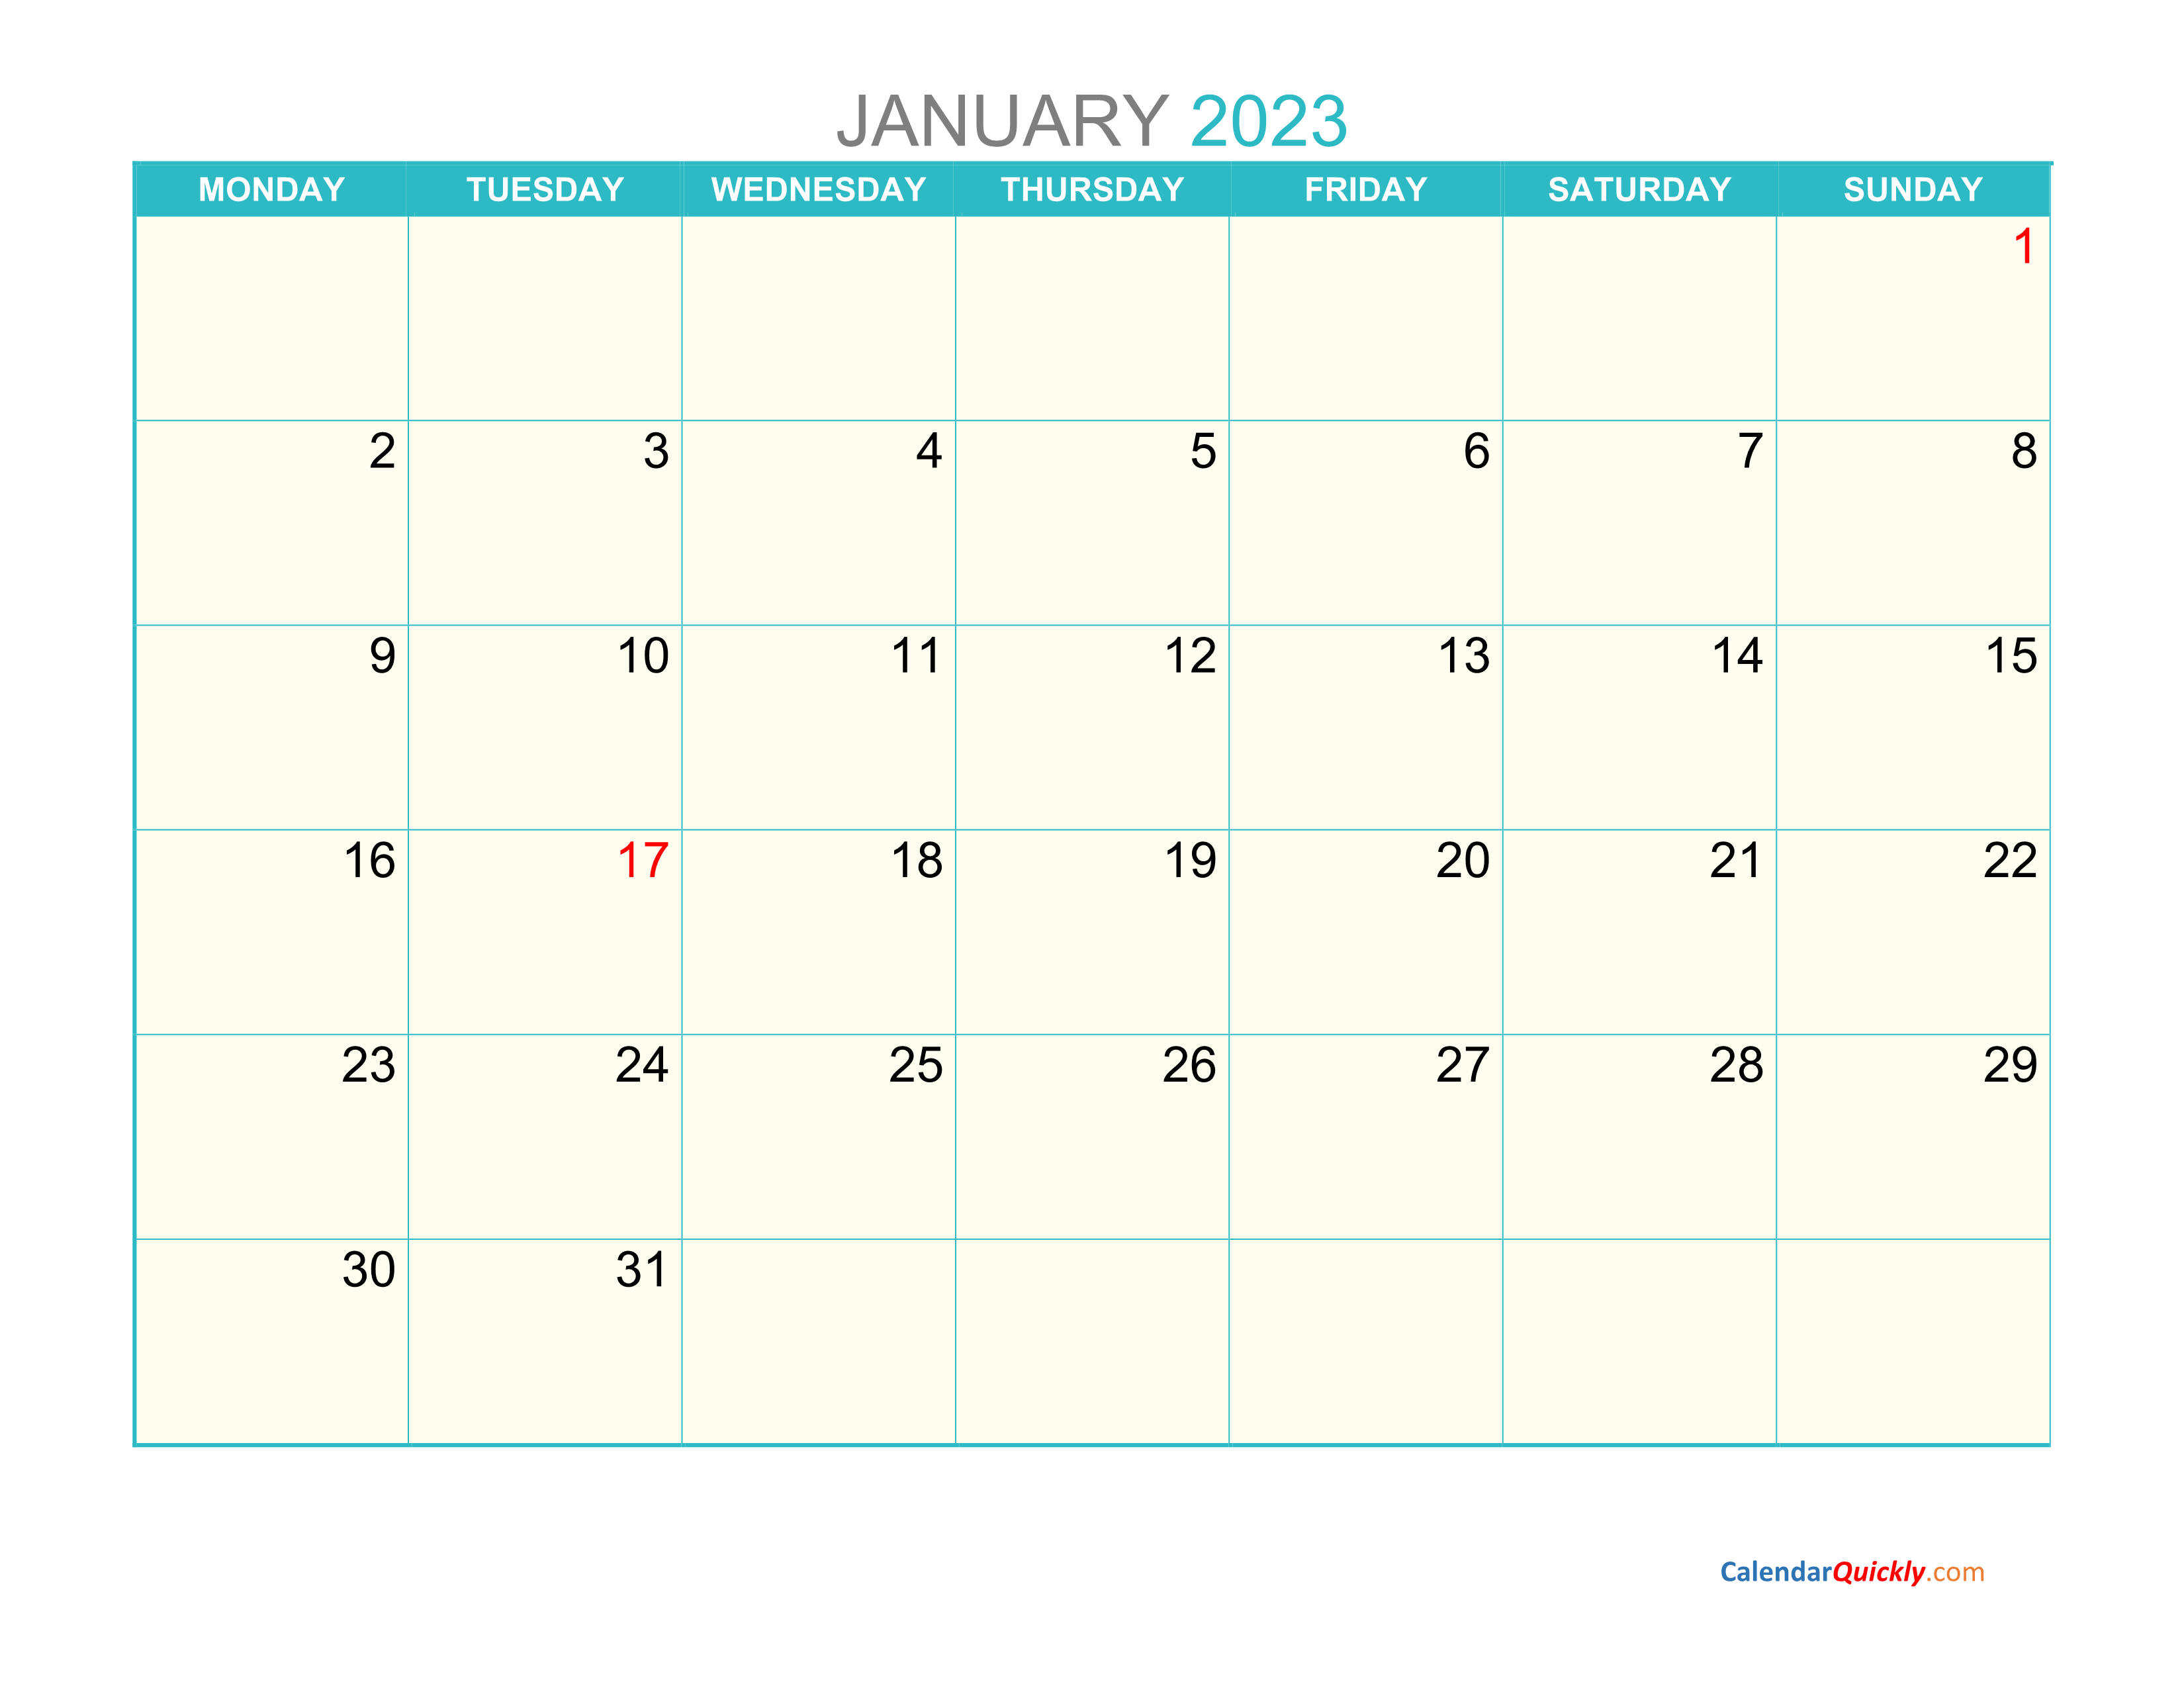 January Monday 2023 Calendar Printable Calendar Quickly